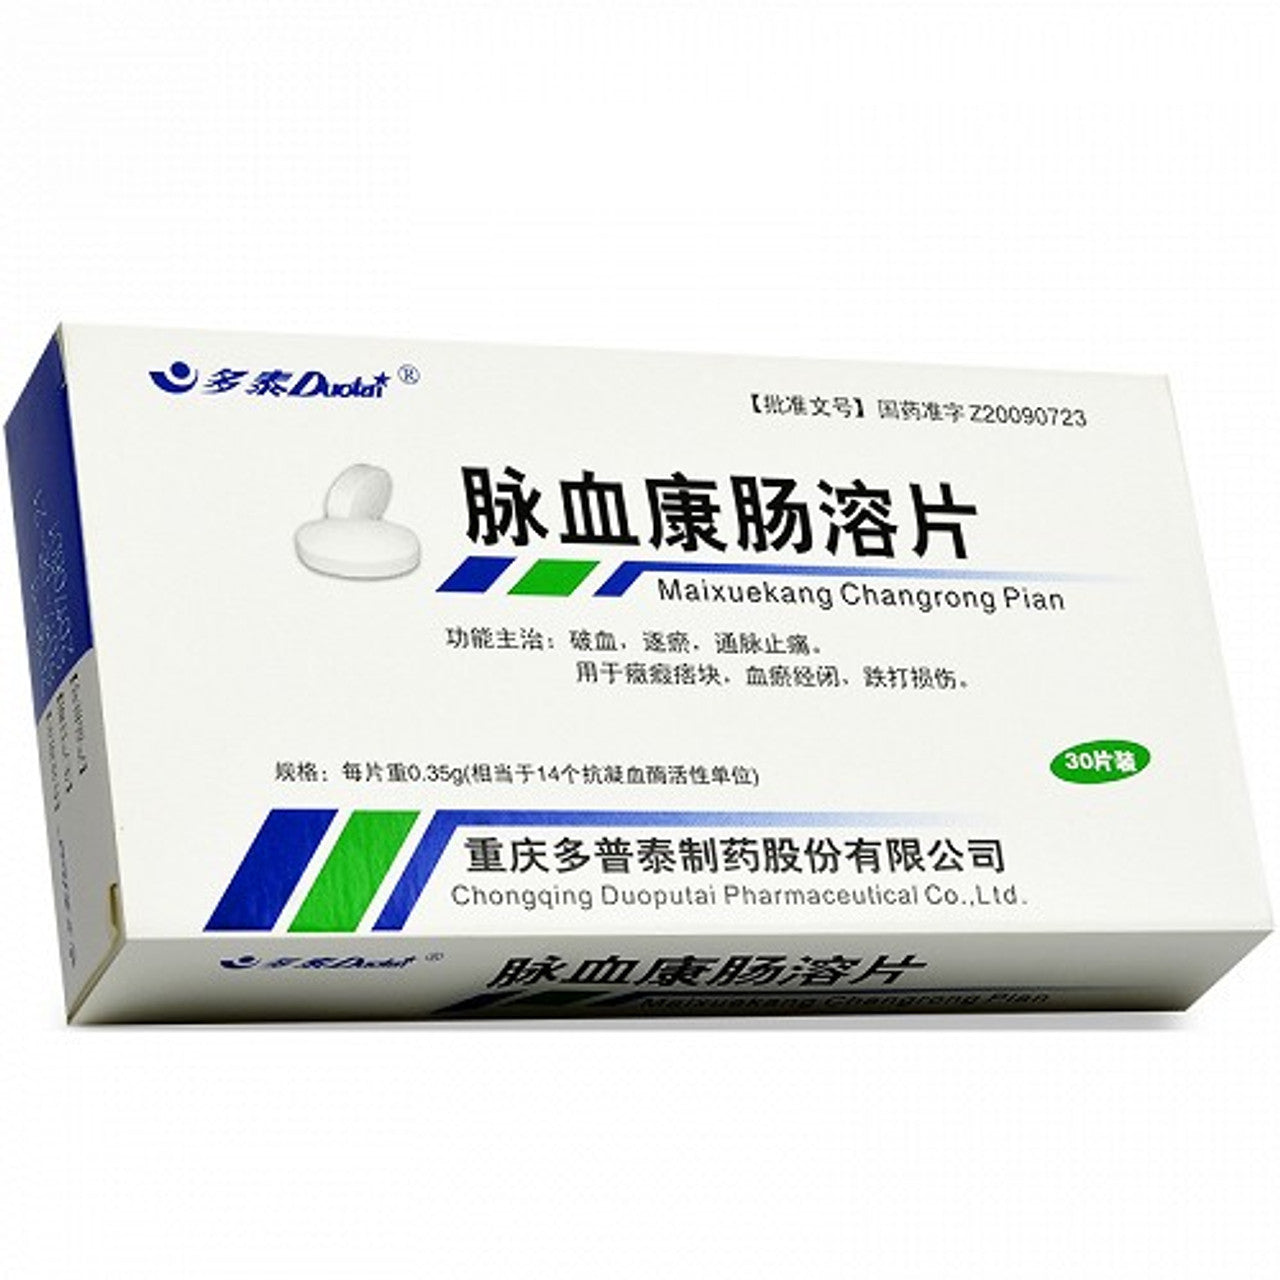 (0.35g*30 Tablets*5 boxes/lot). Maixuekang Changrong Pian For lumps, blood stasis, amenorrhea, and bruises.